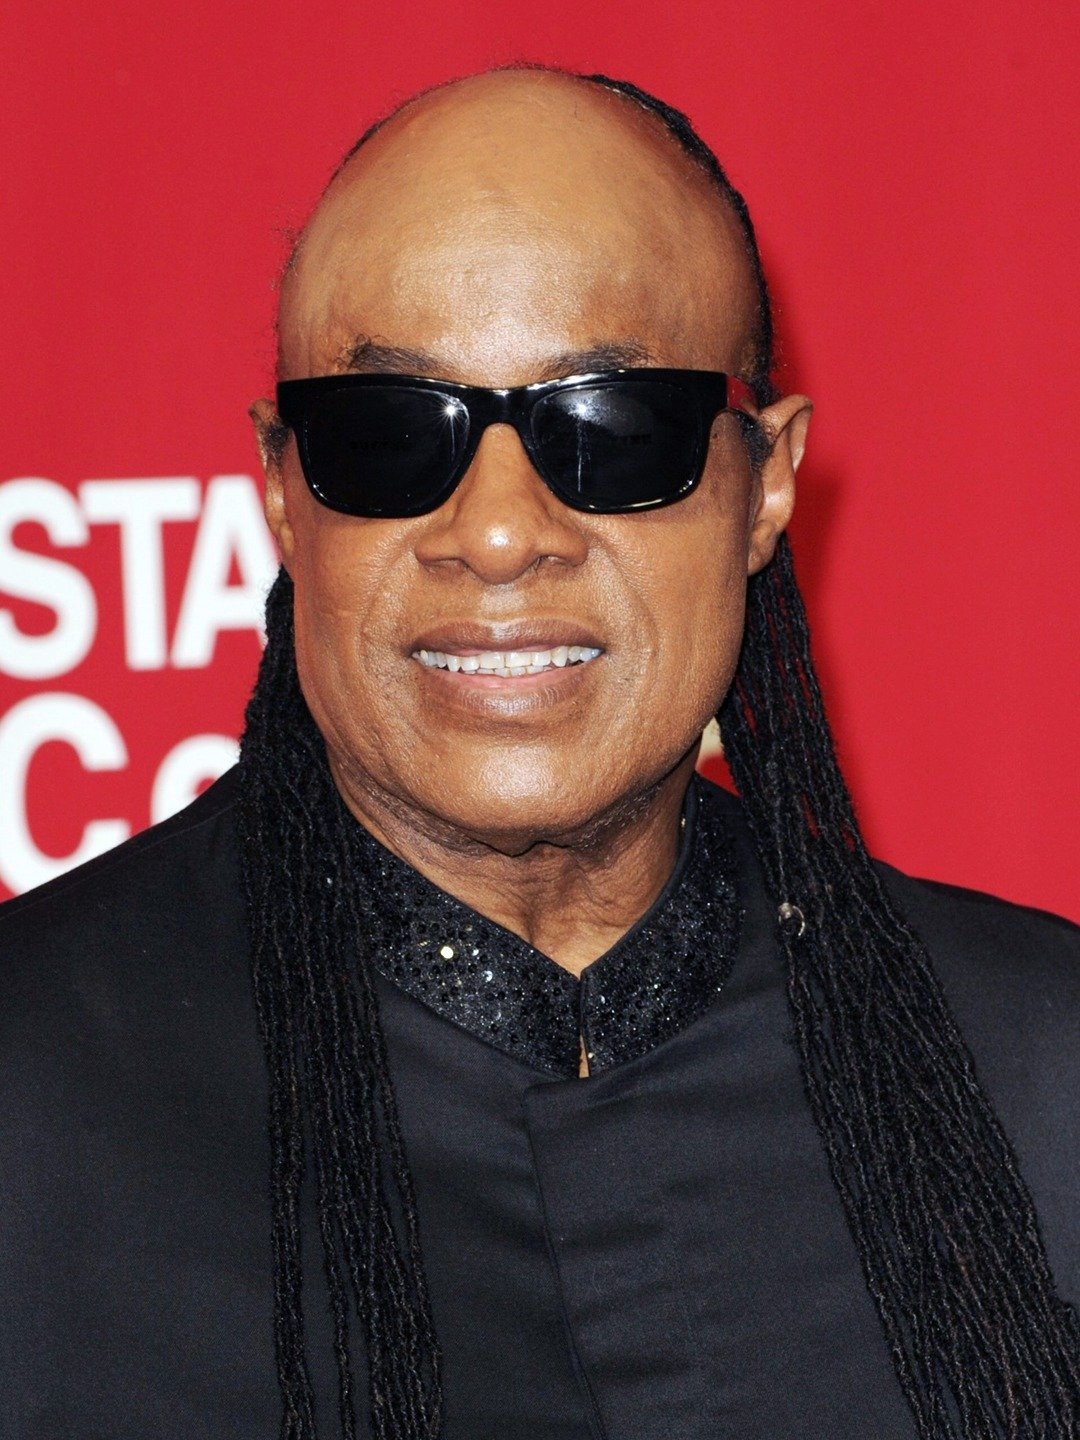 Stevie Wonder Just Admitted Doing Something Naughty To Princes Music   Radio X